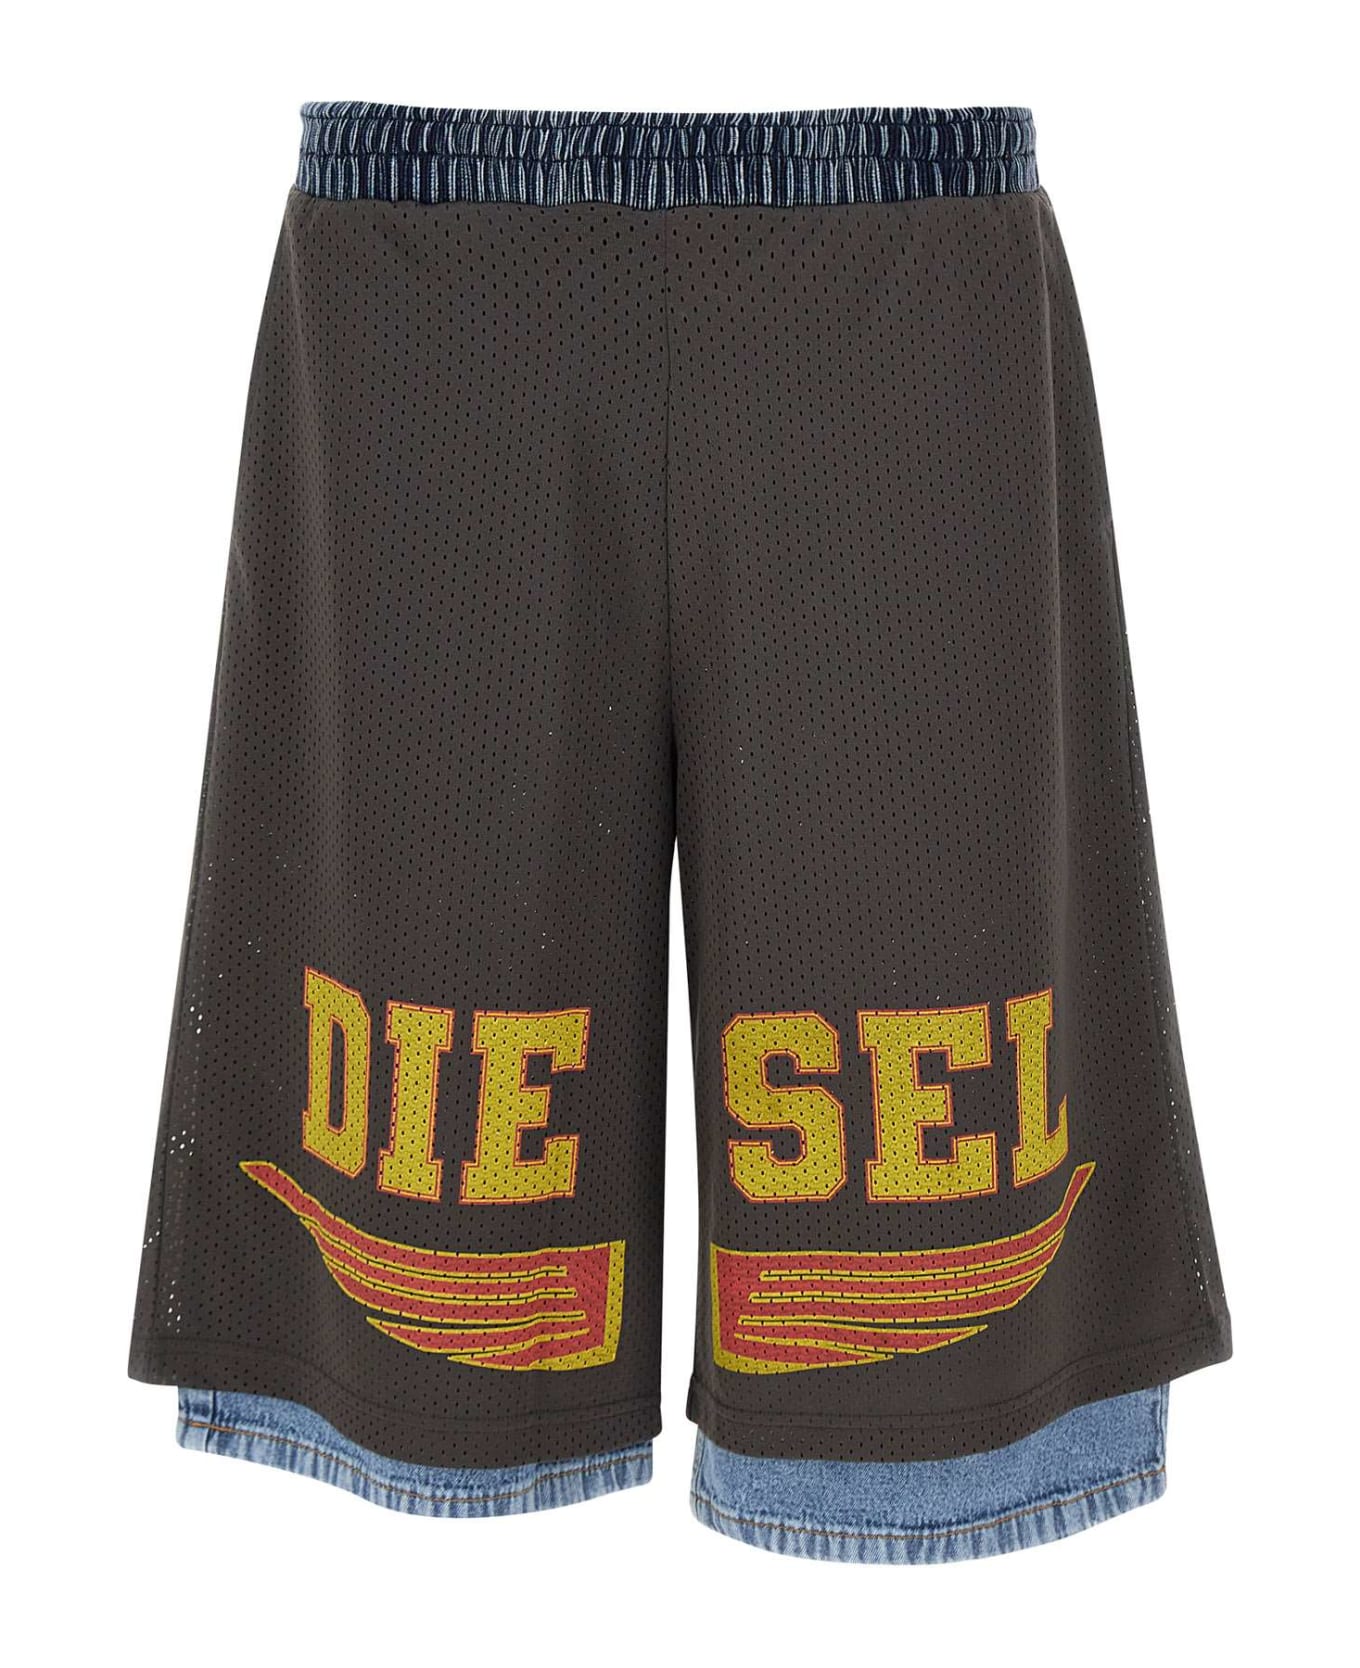 Diesel "p-ecky" Shorts - GREY/Blue